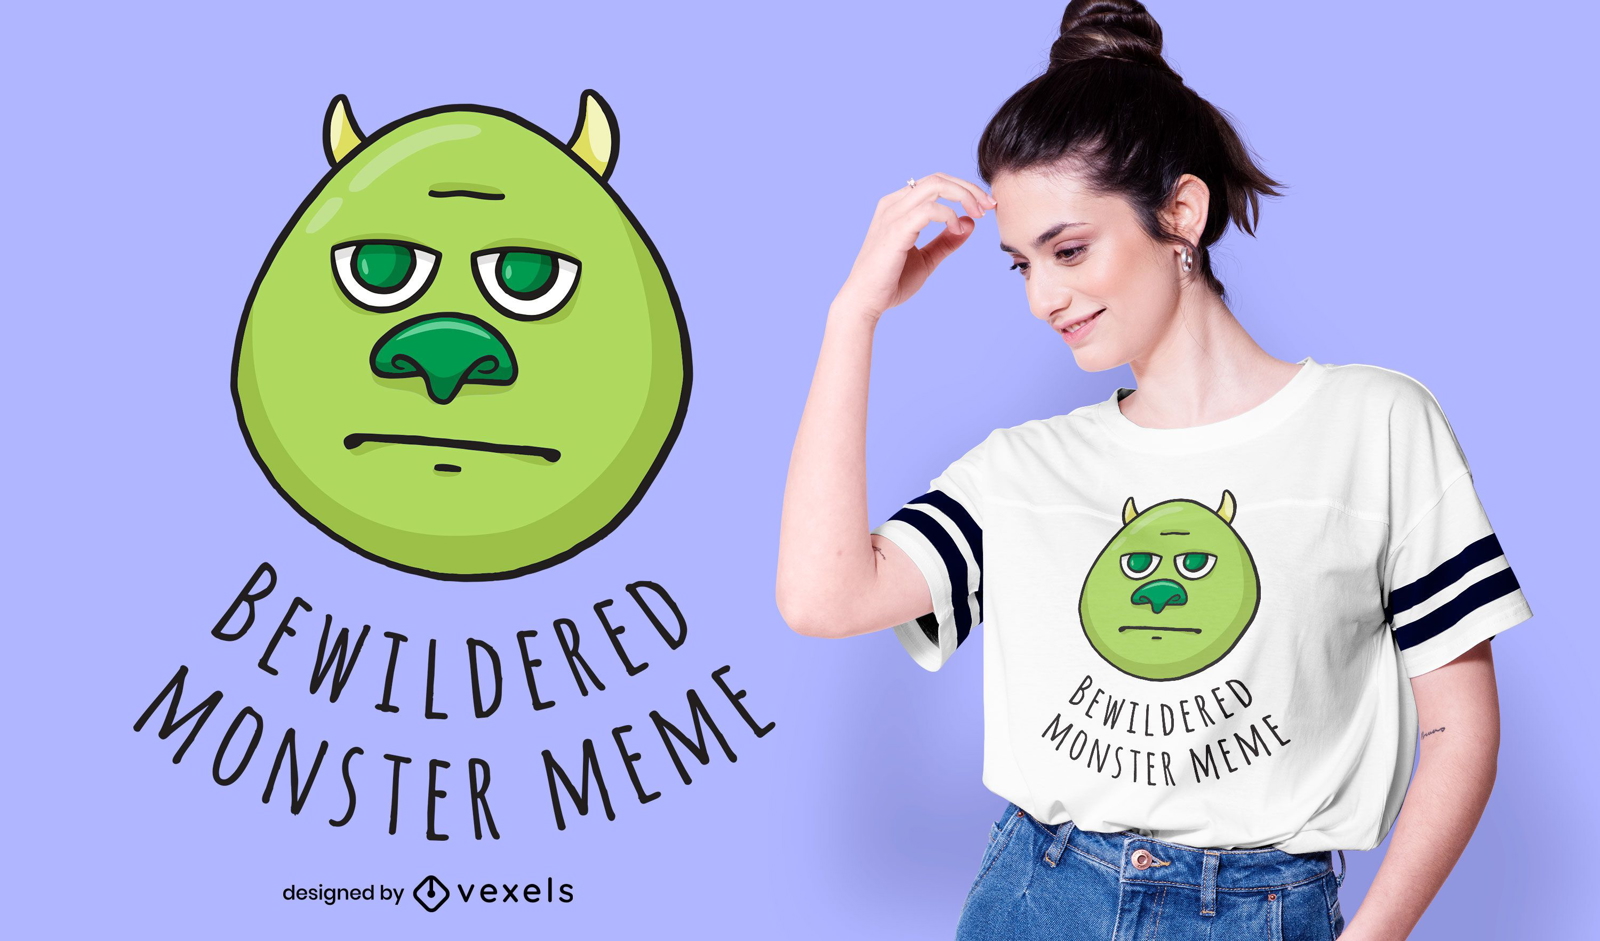 Bewildered Monster Meme T-shirt Design